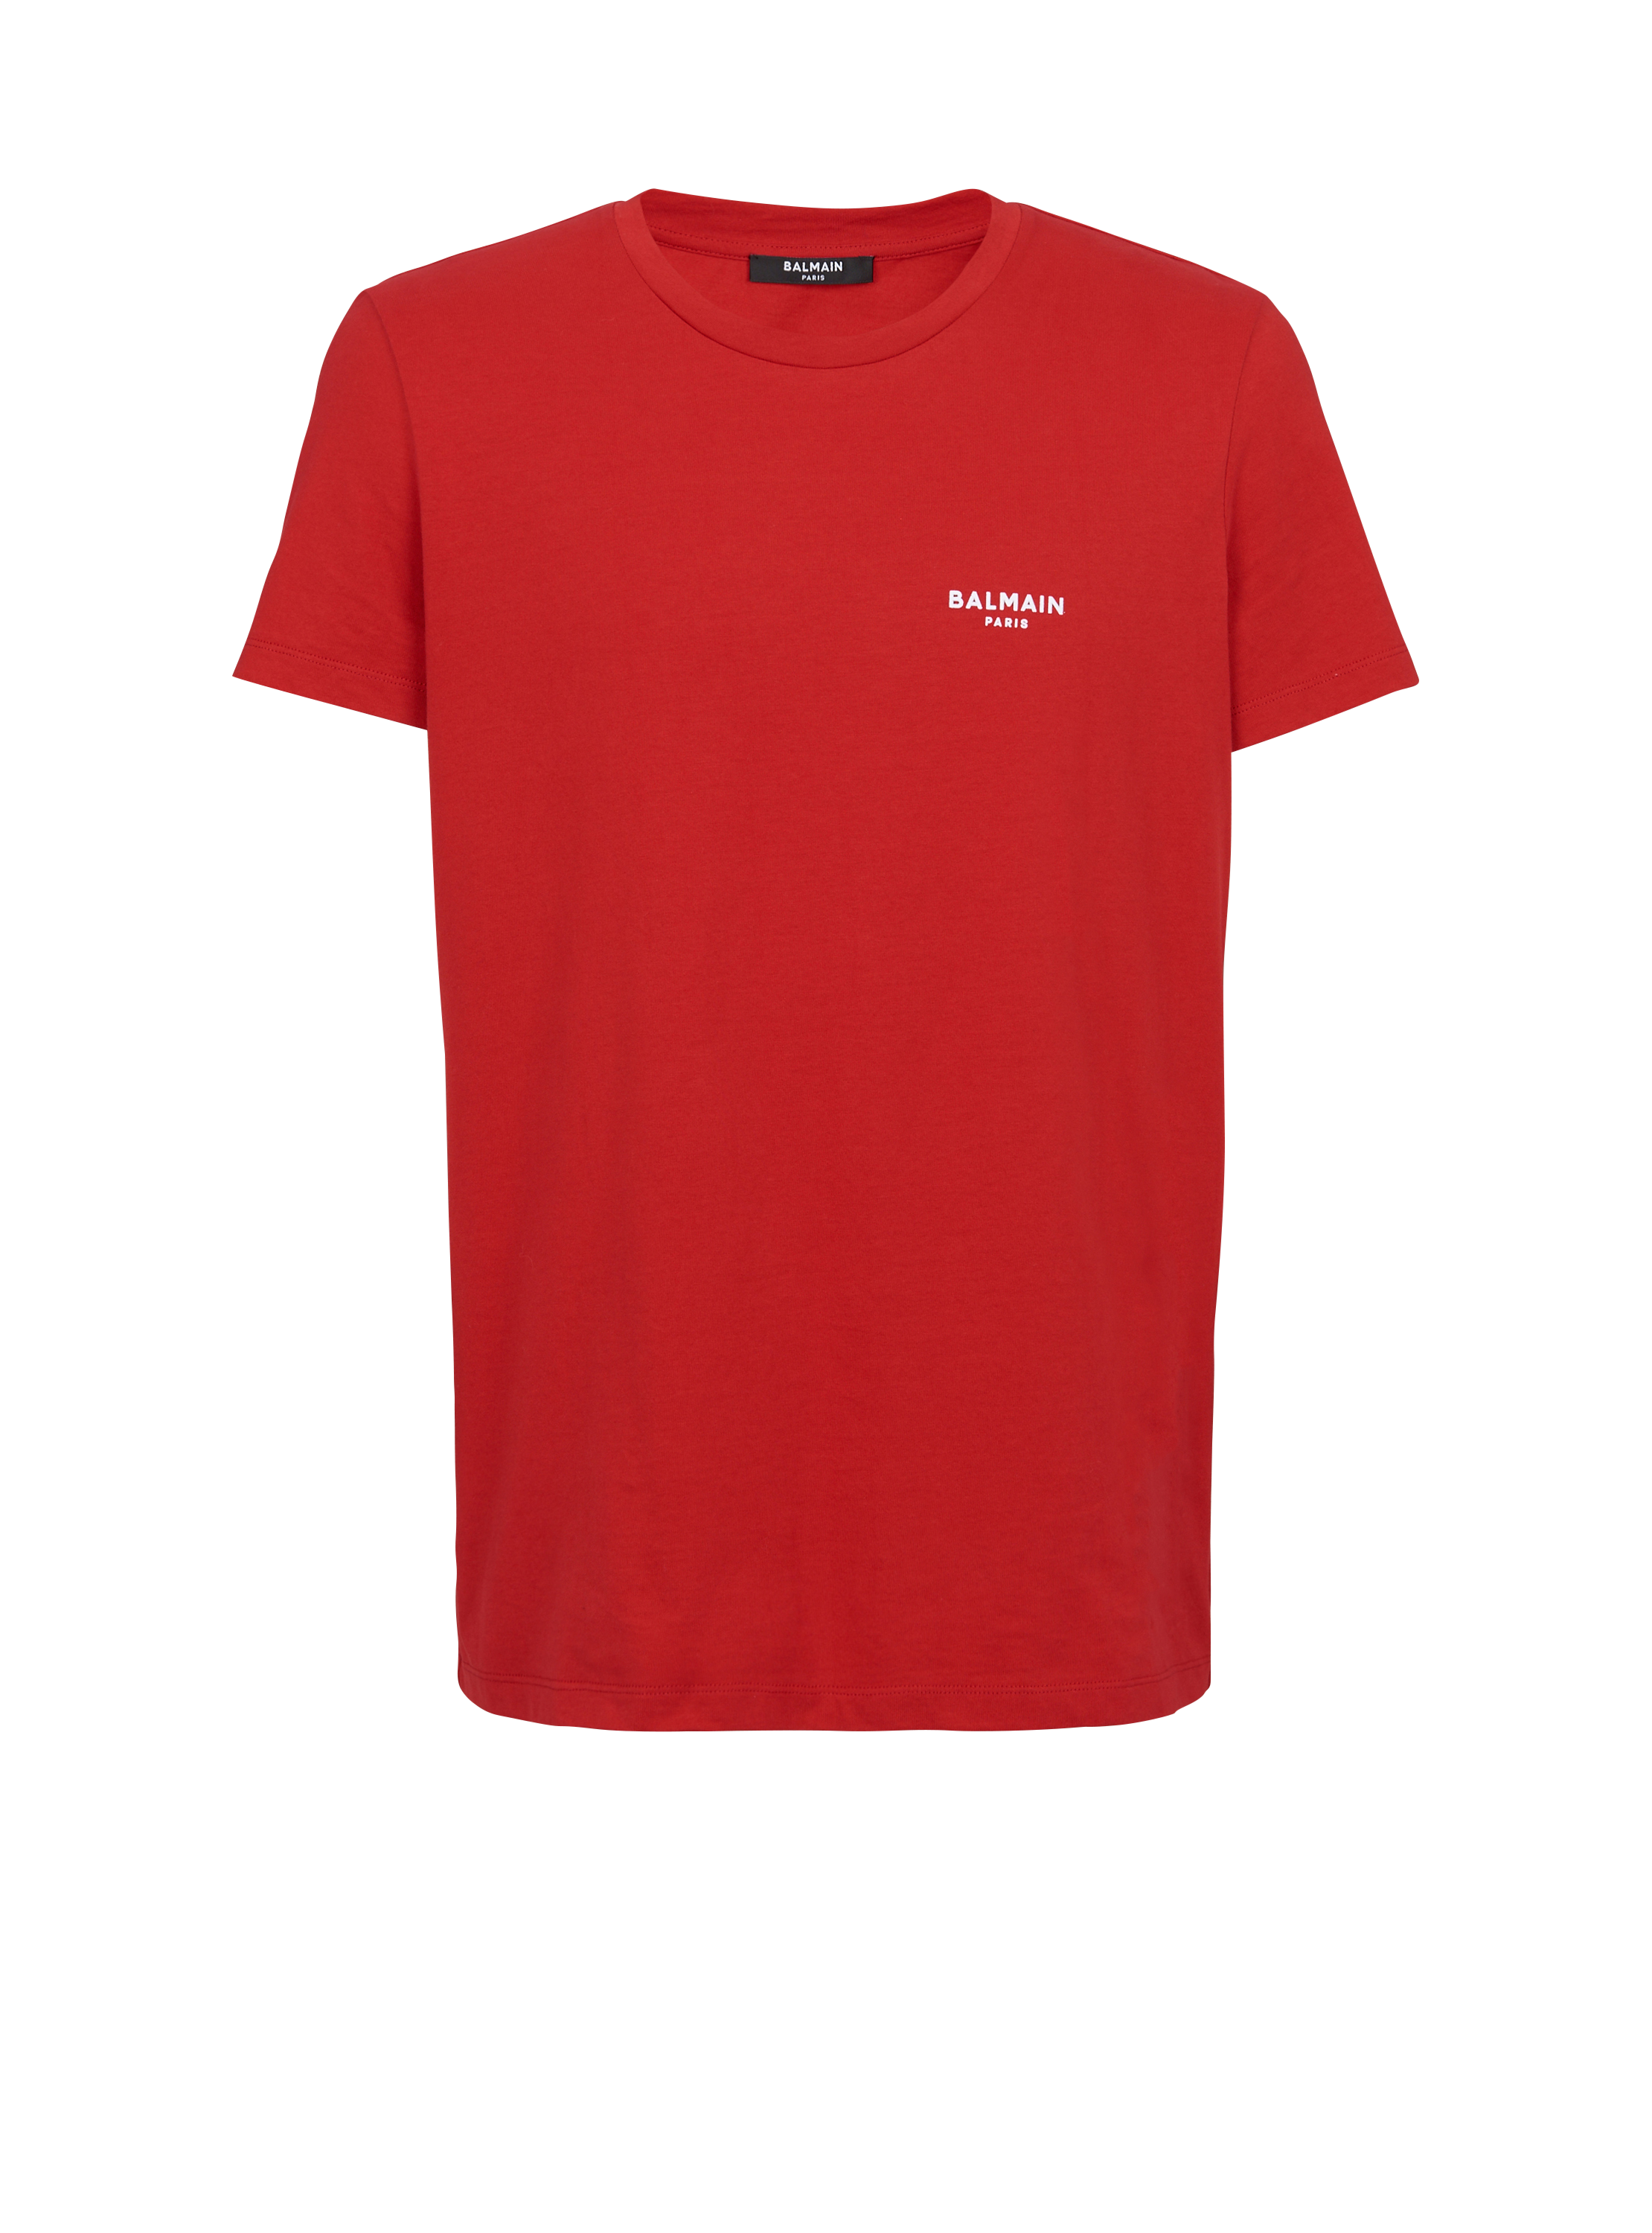 Pierre Balmain Mens Iconic Cult Logoshirt Logo Shirt Short Sleeve T-Shirt Top 50 L 